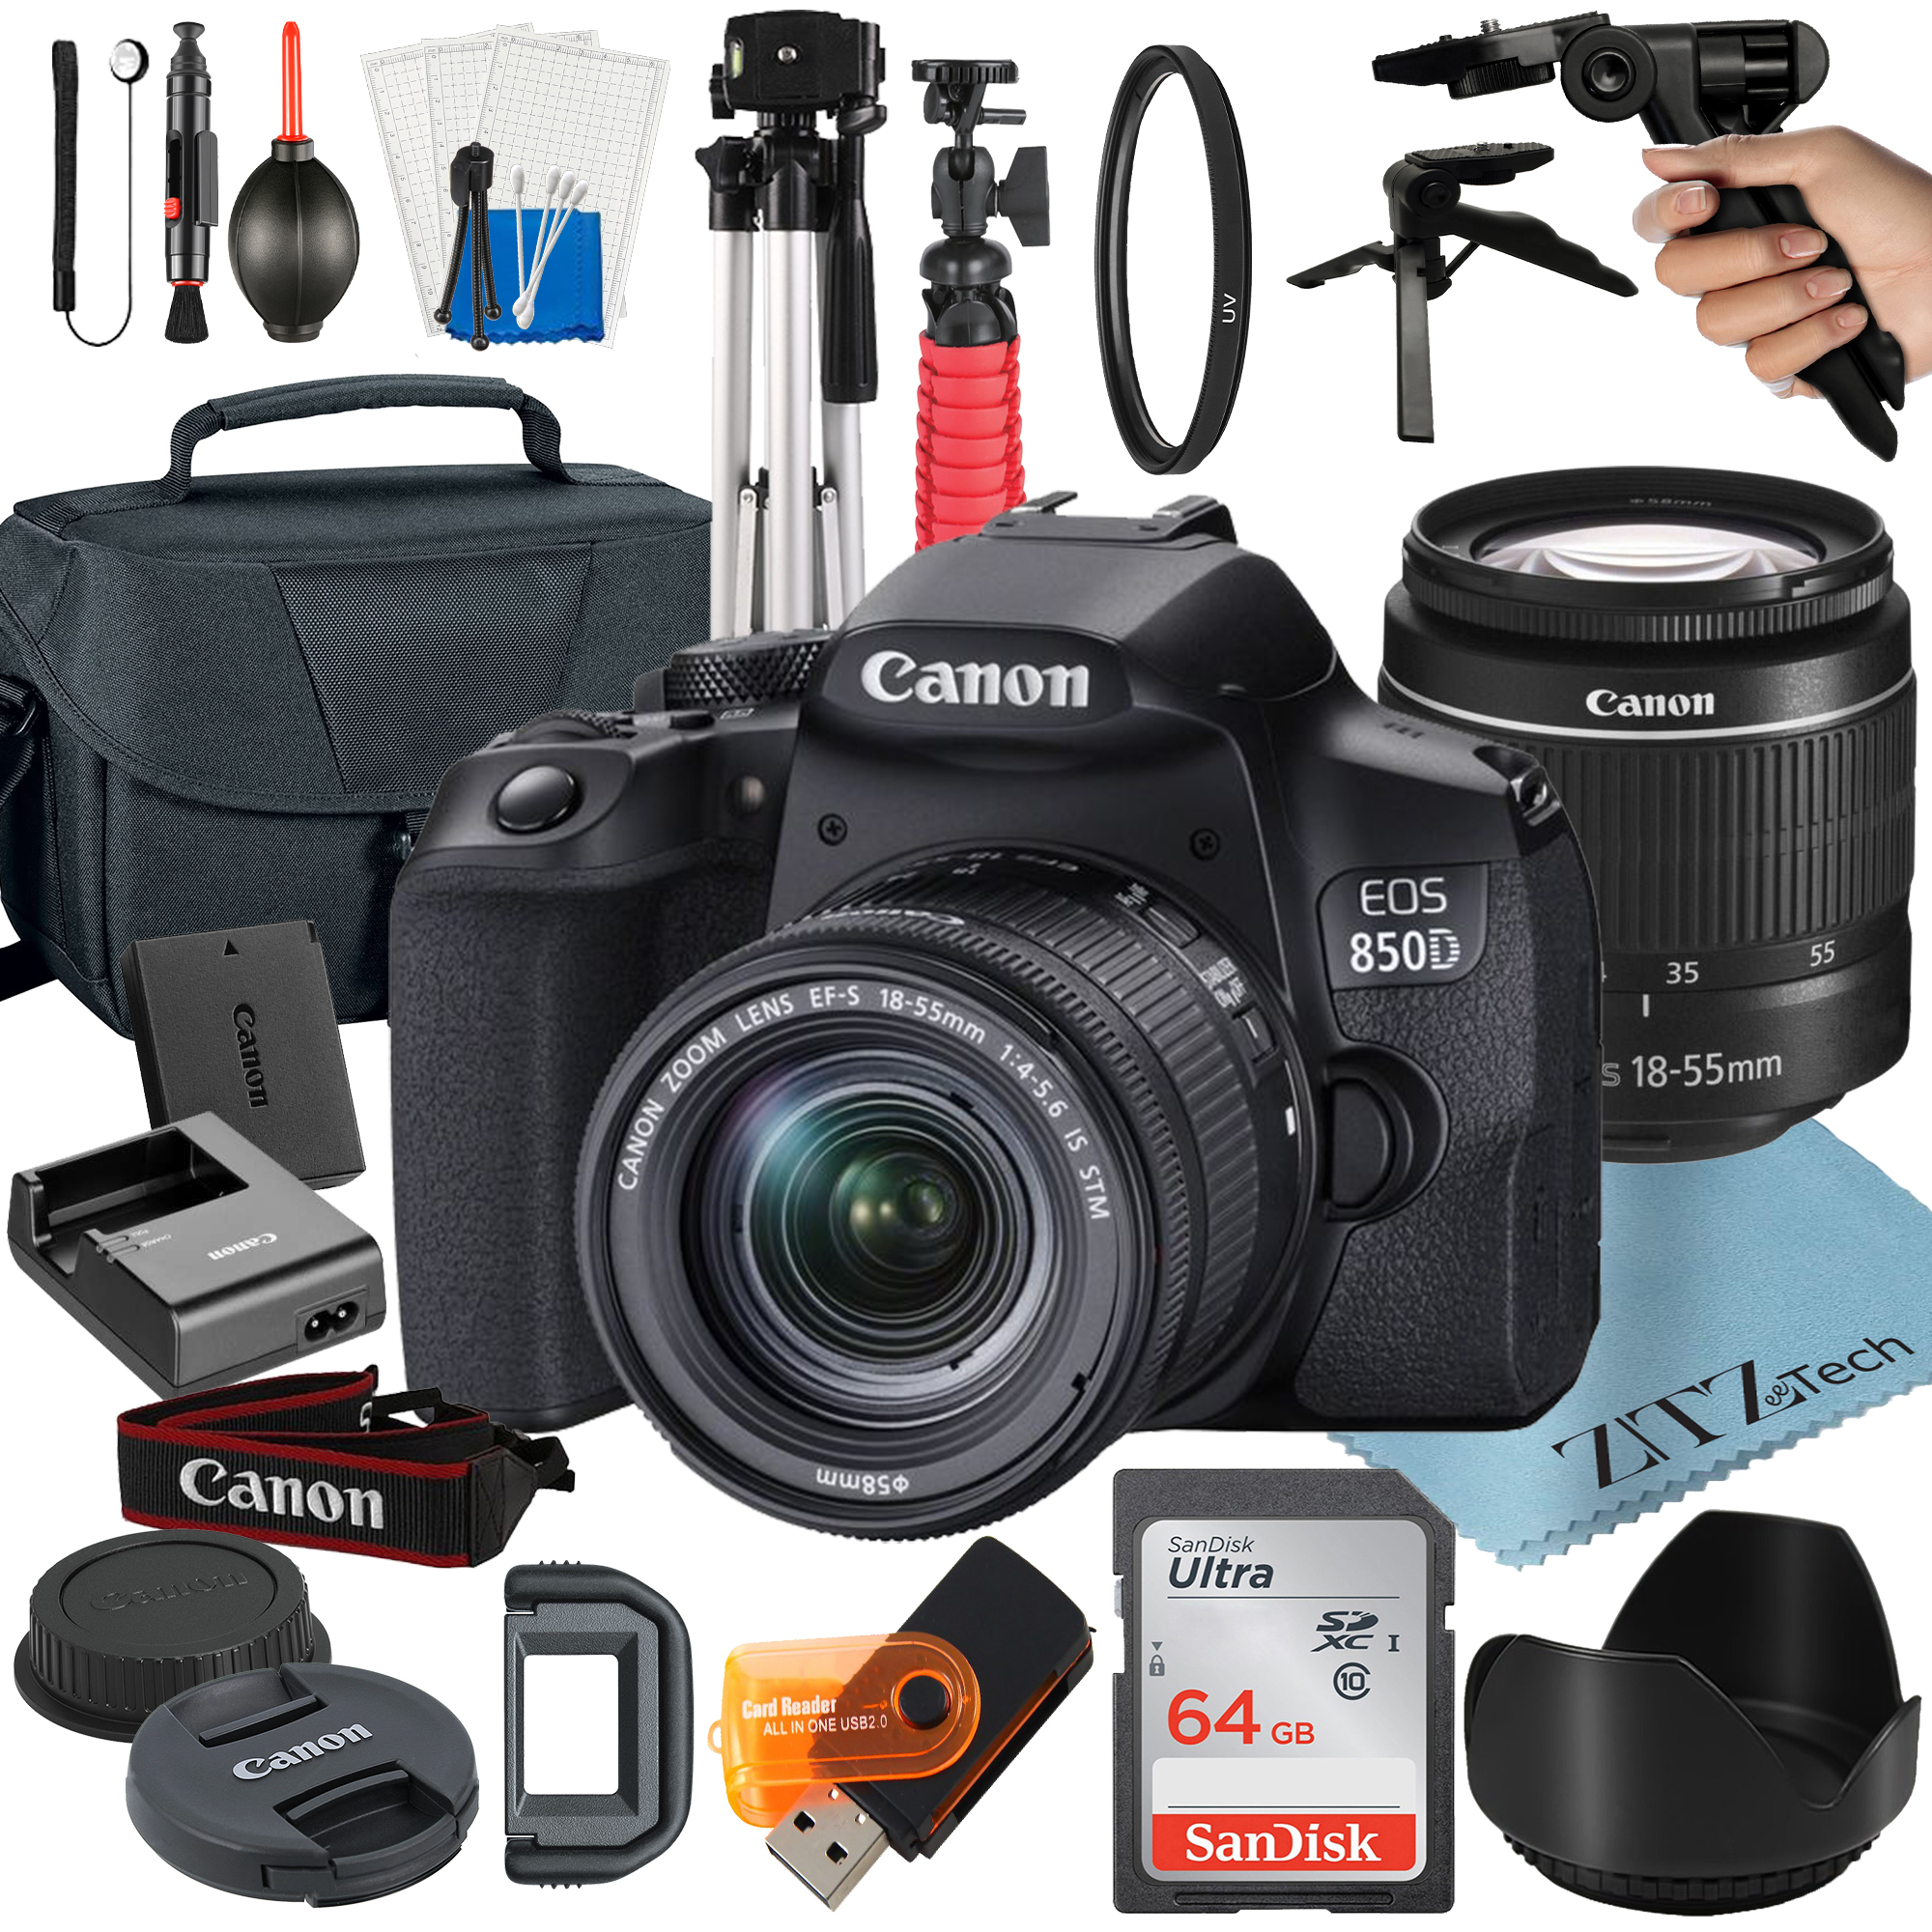 Canon EOS 850D / Rebel T8i DSLR Camera Bundle with 18-55mm Zoom Lens + 64GB SanDisk Card + Case + Tripod + ZeeTech Accessory